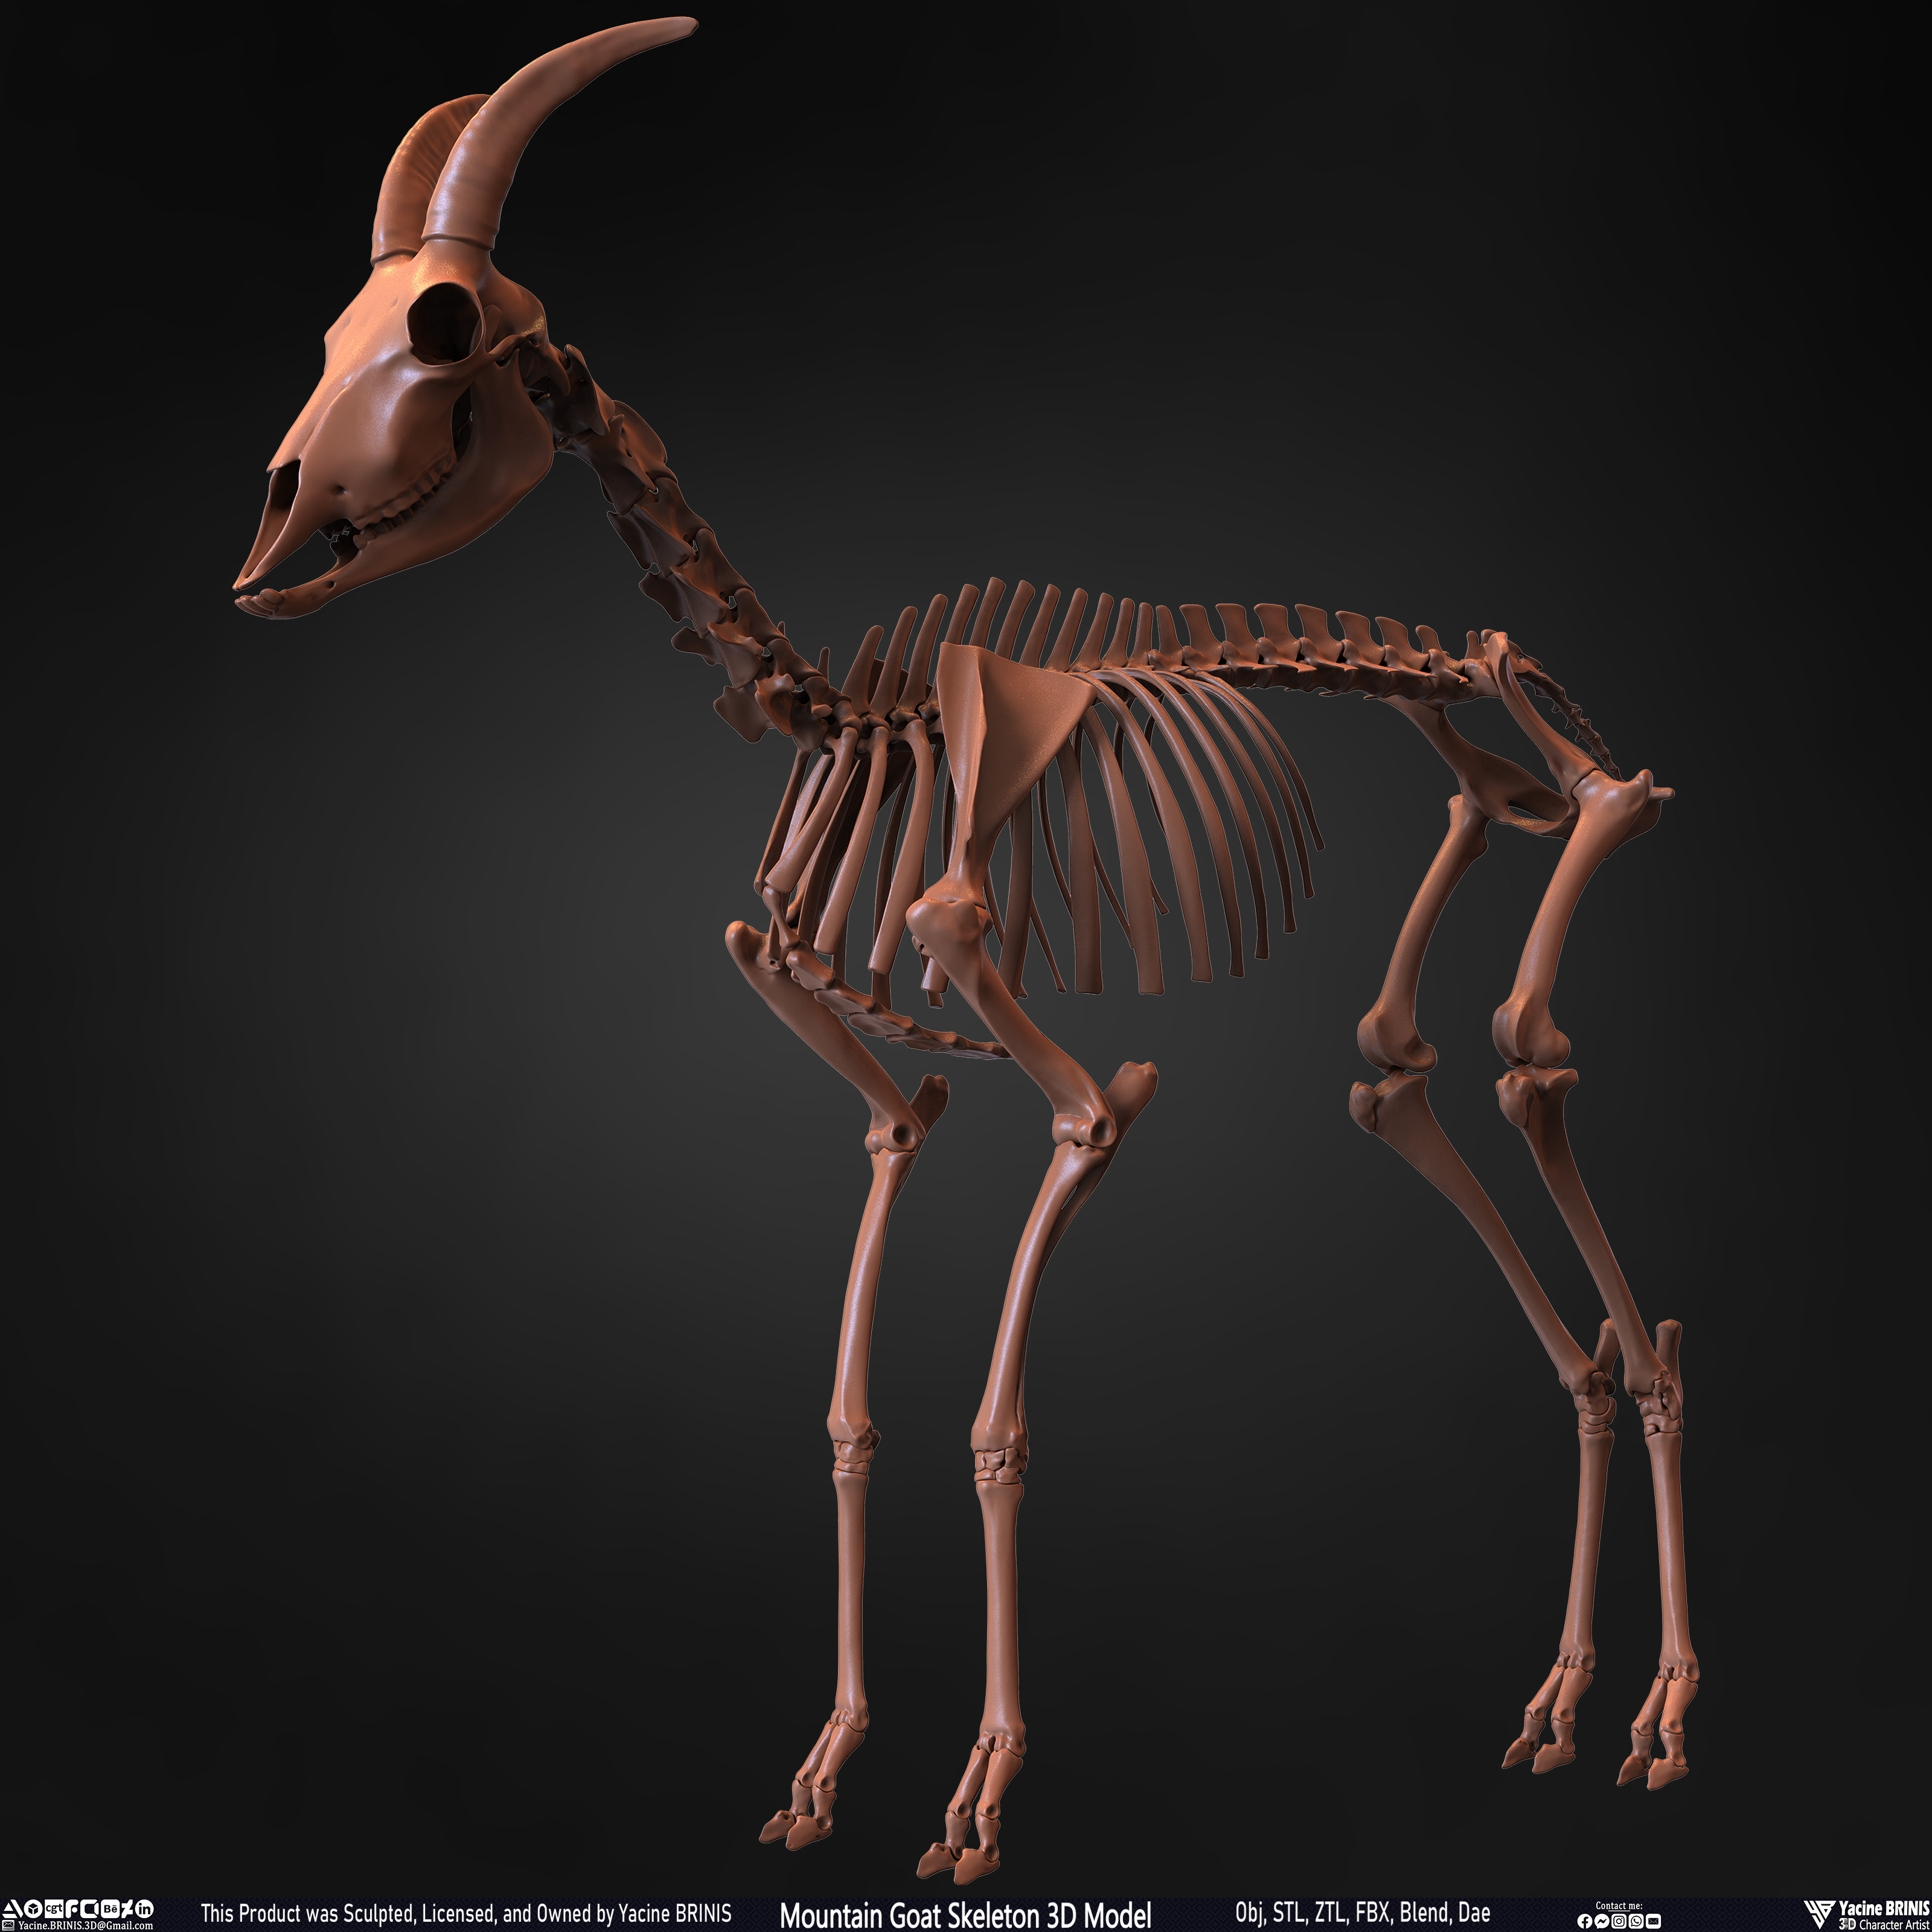 Mountain Goat Skeleton 3D Model Sculpted by Yacine BRINIS Set 009